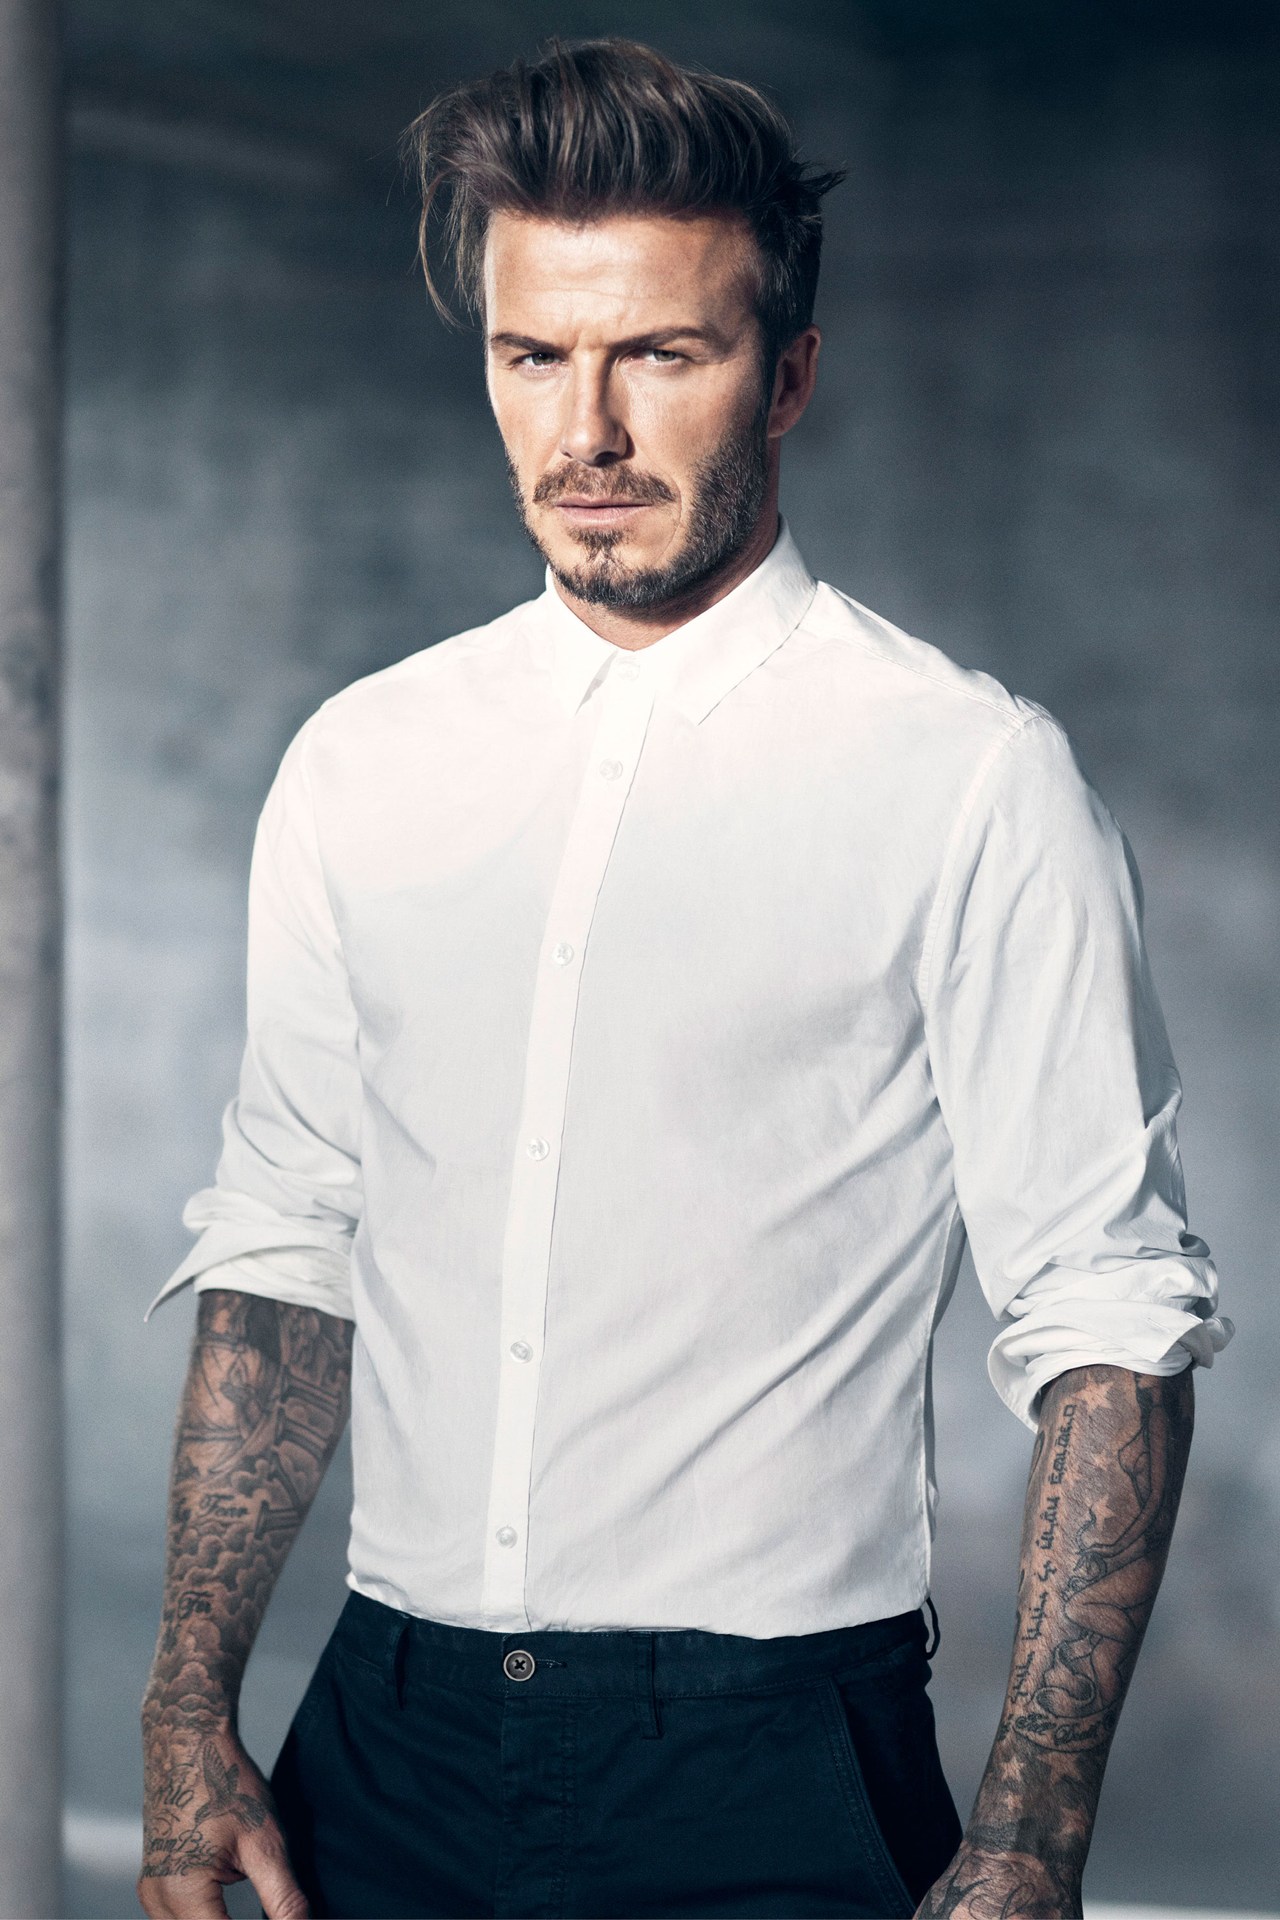 David-Beckham-HM-9-Vogue 20Jan15 pr_b_1280x1920